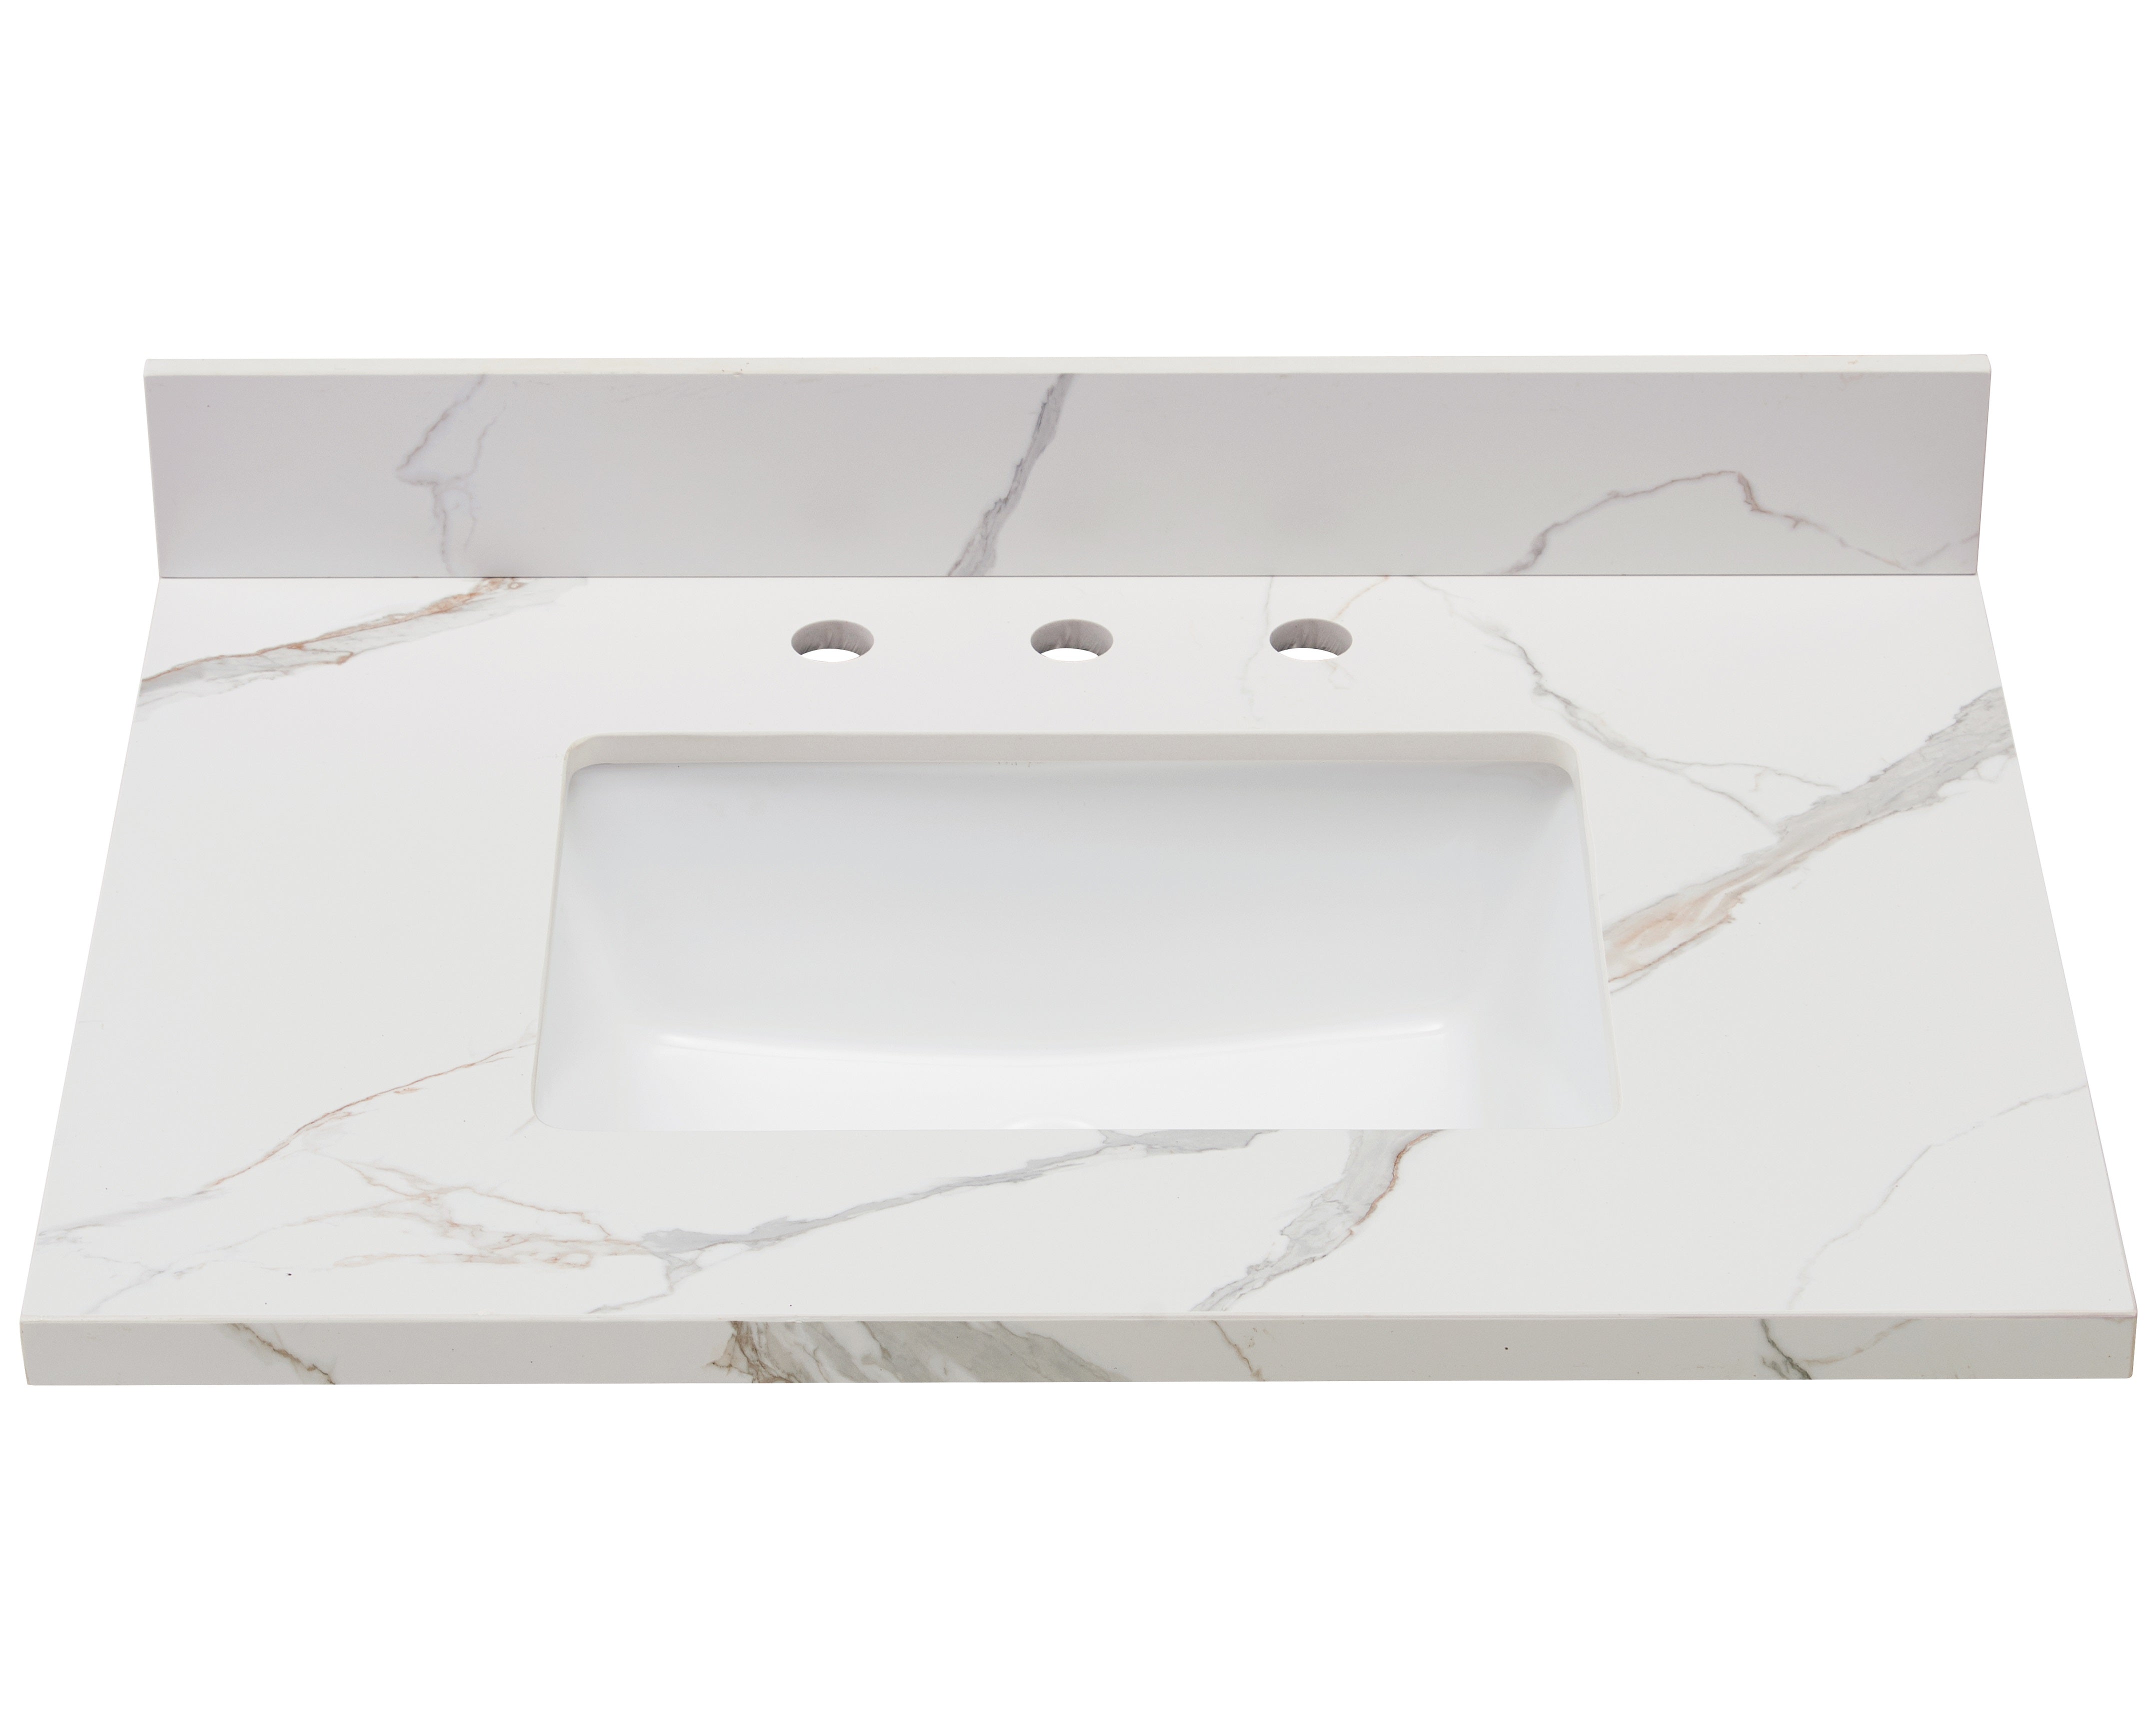 Eivissa Single Sink Bathroom Vanity Countertop in Calacatta White